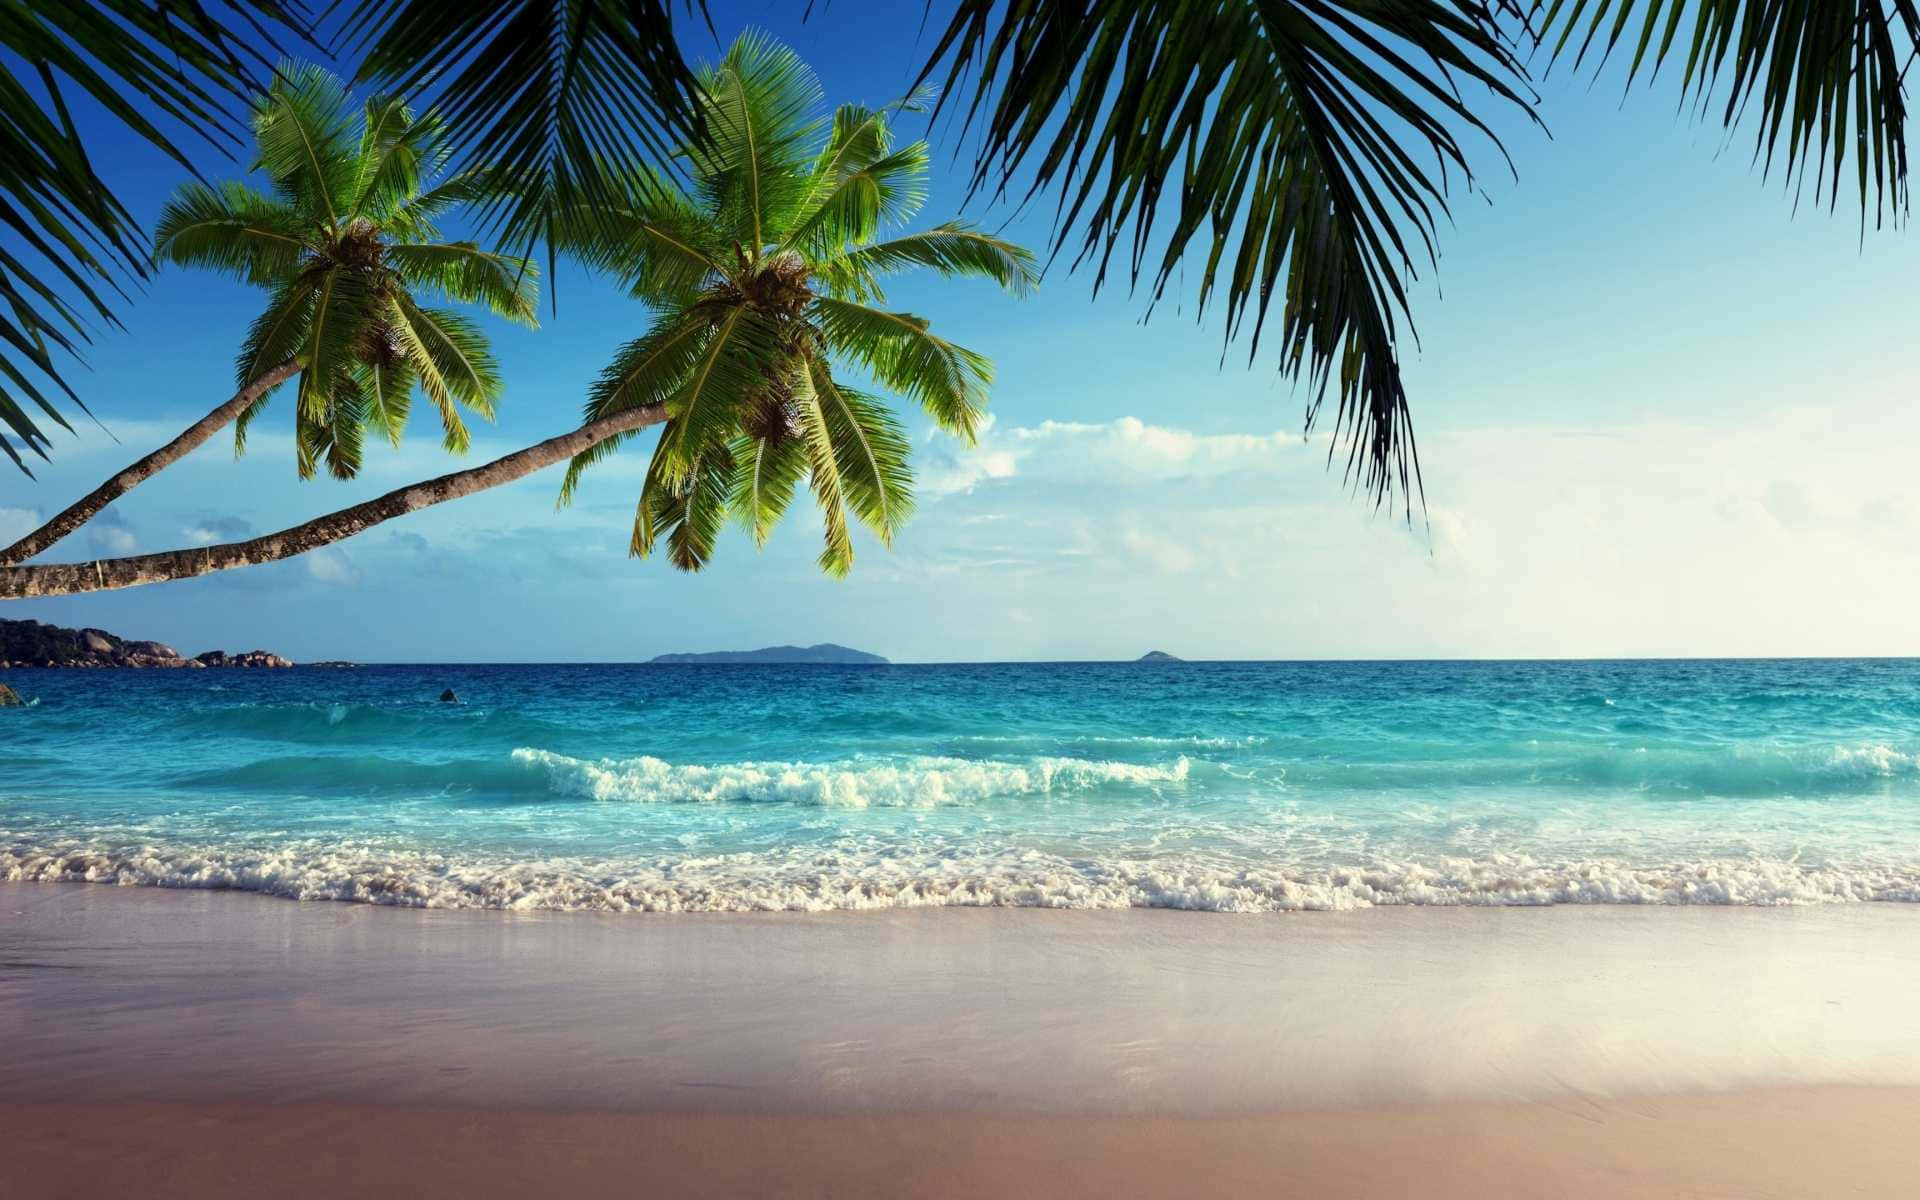 Et perfekt billed-perfekt tropisk strand paradis. Wallpaper